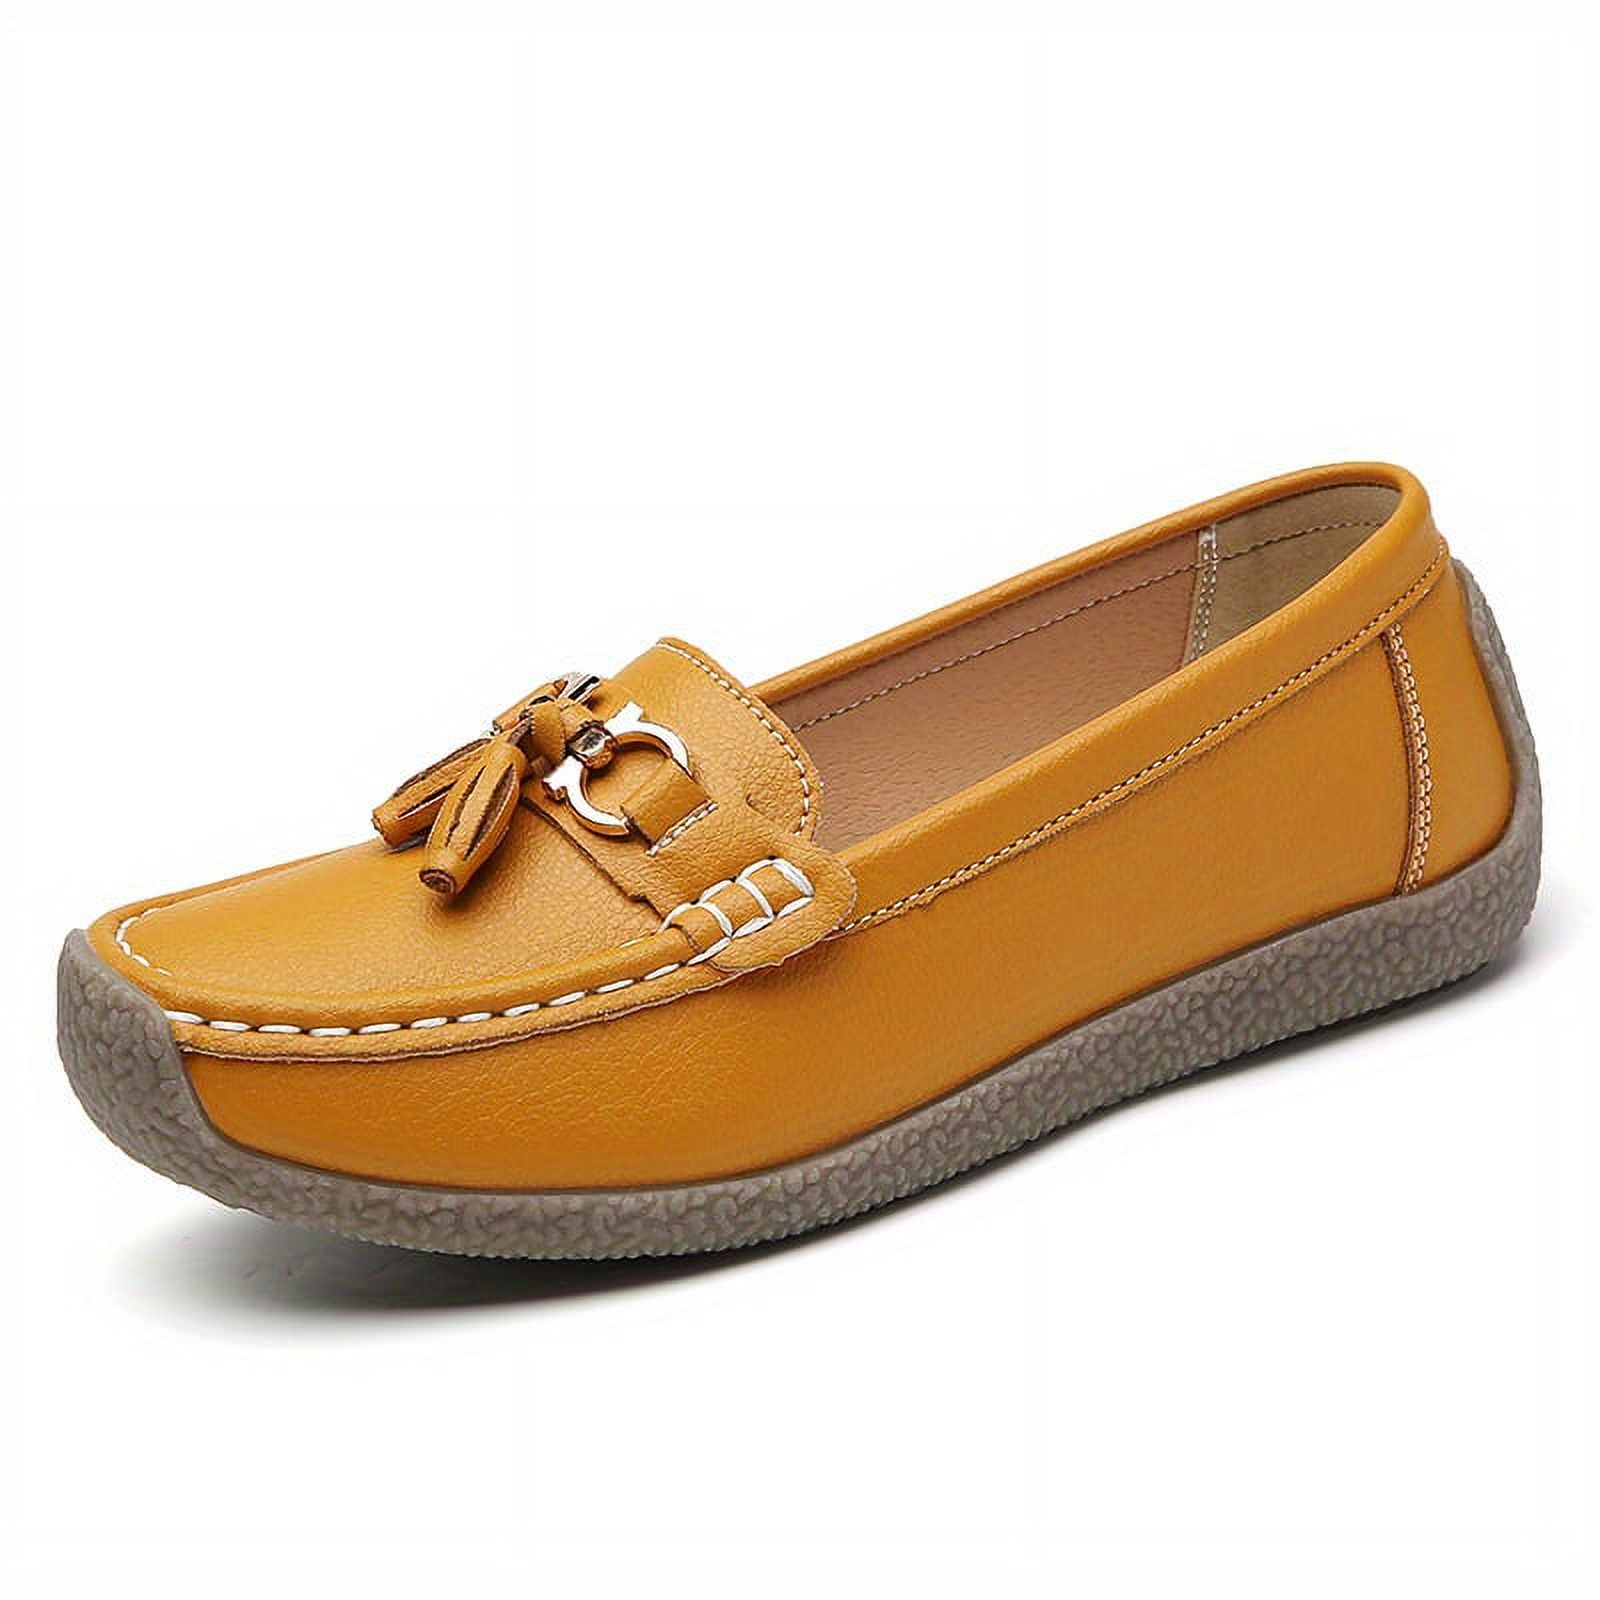 & Comfortable Spring Loafers for - Sequin-Embellished Slip-On Solid ...